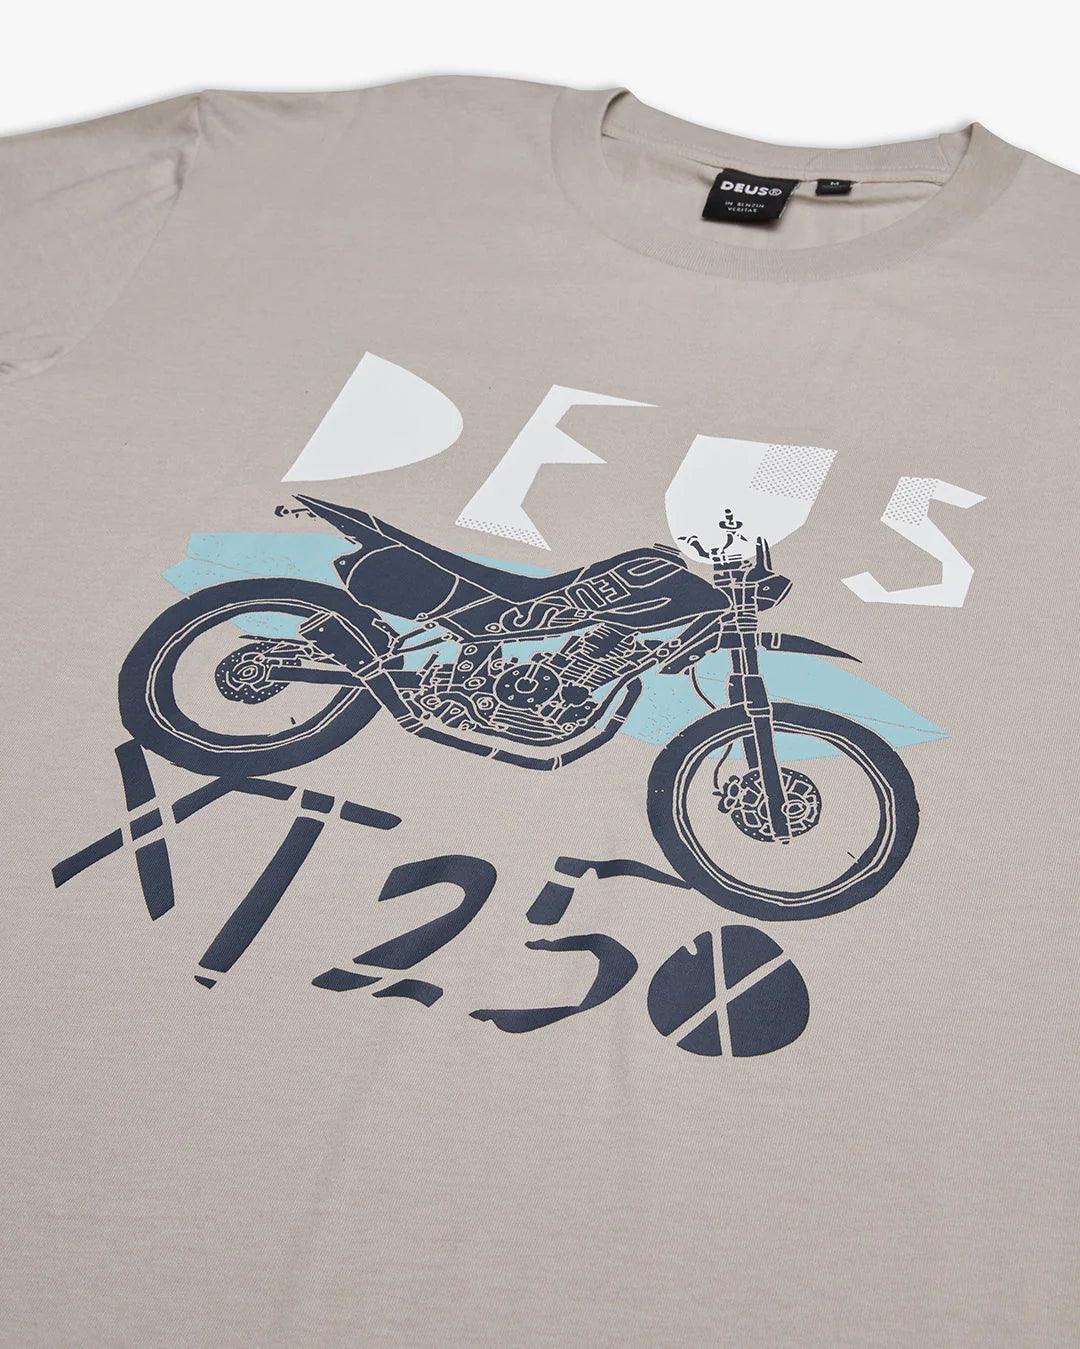 Camiseta Deus Ex Machina XT250 Silver Lining - ECRU